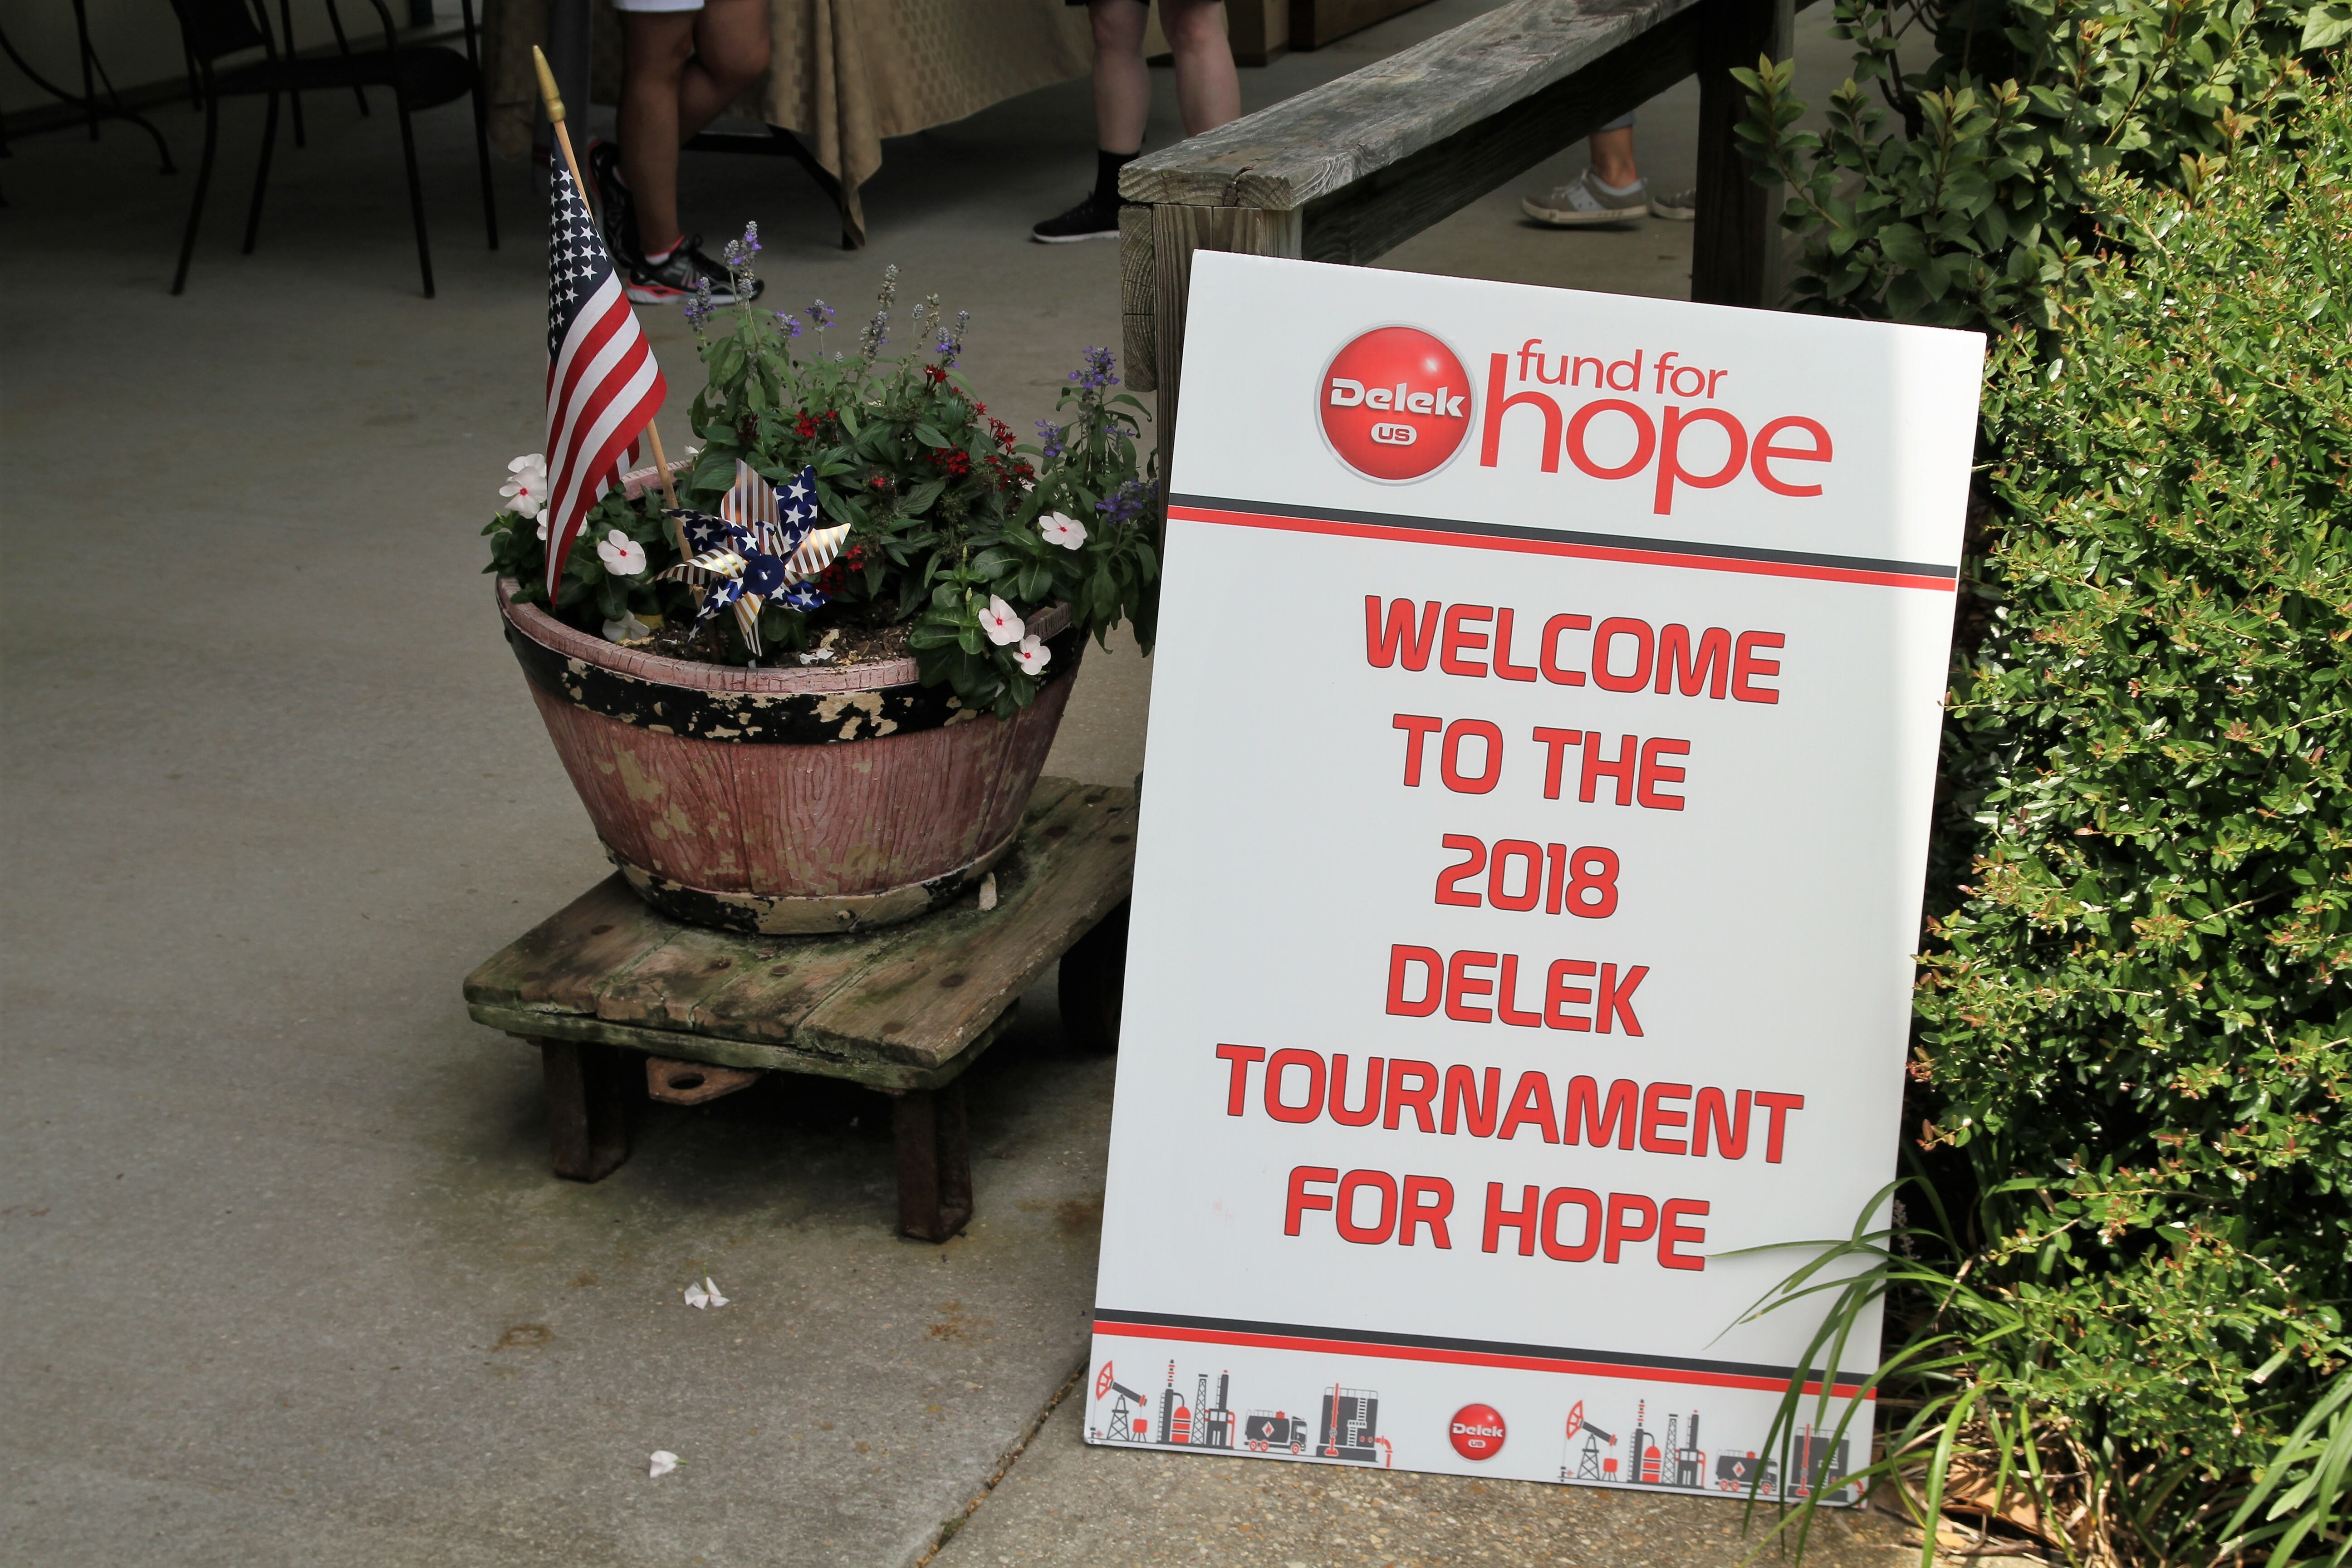 delek tournament for hope sign